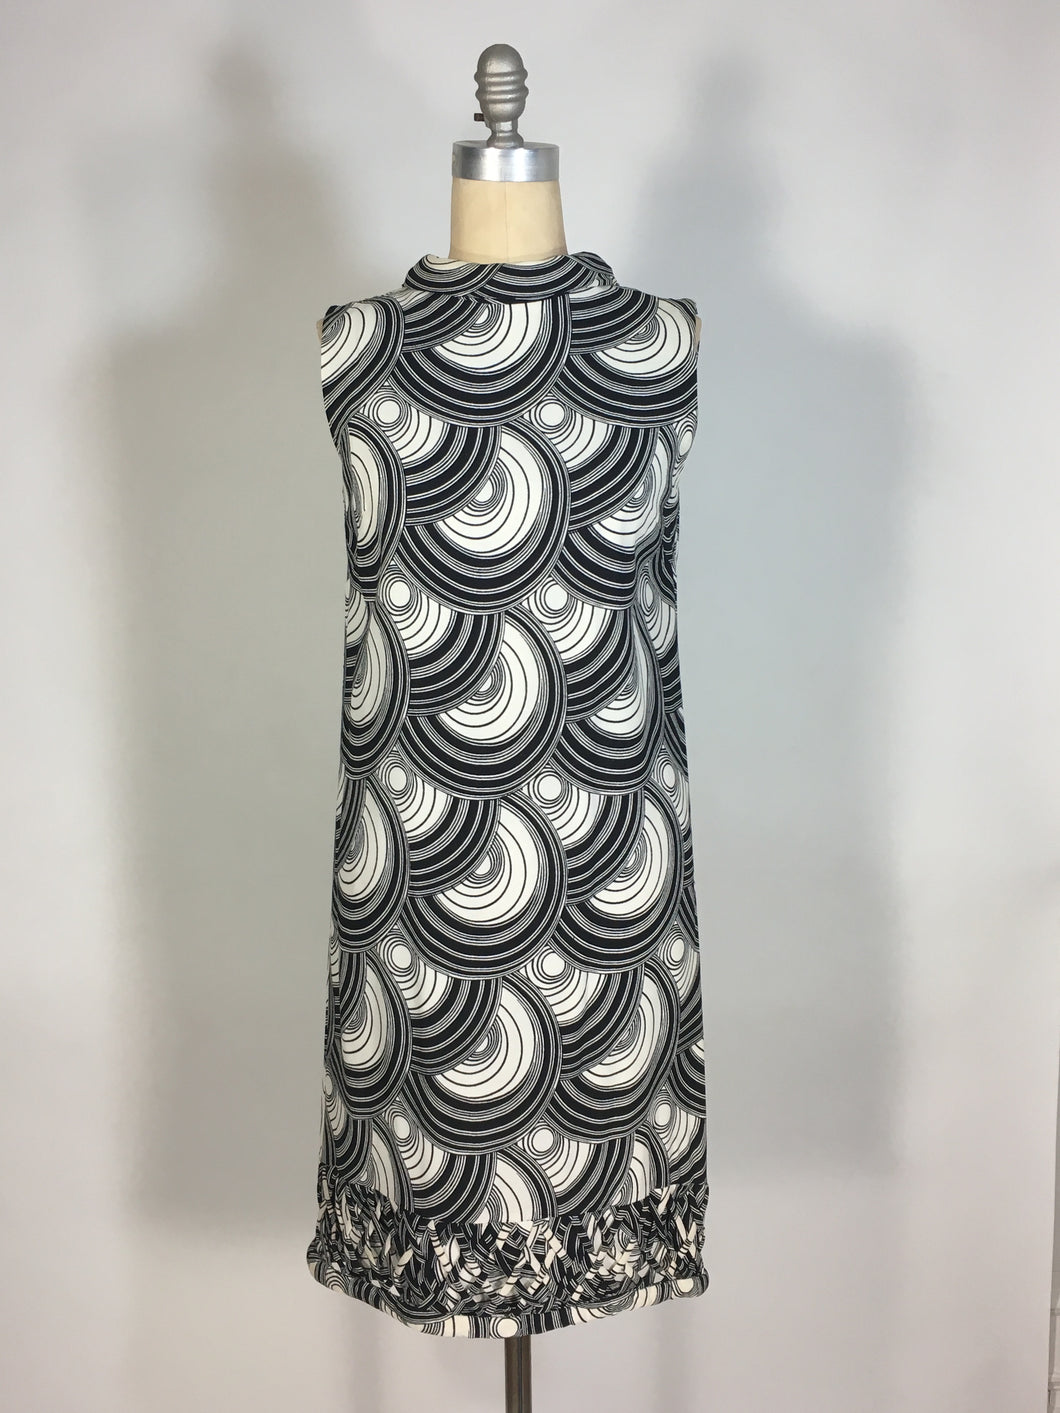 1960's Black+White OPTICAL PRINT dress w/hem lattice detail by Martin's